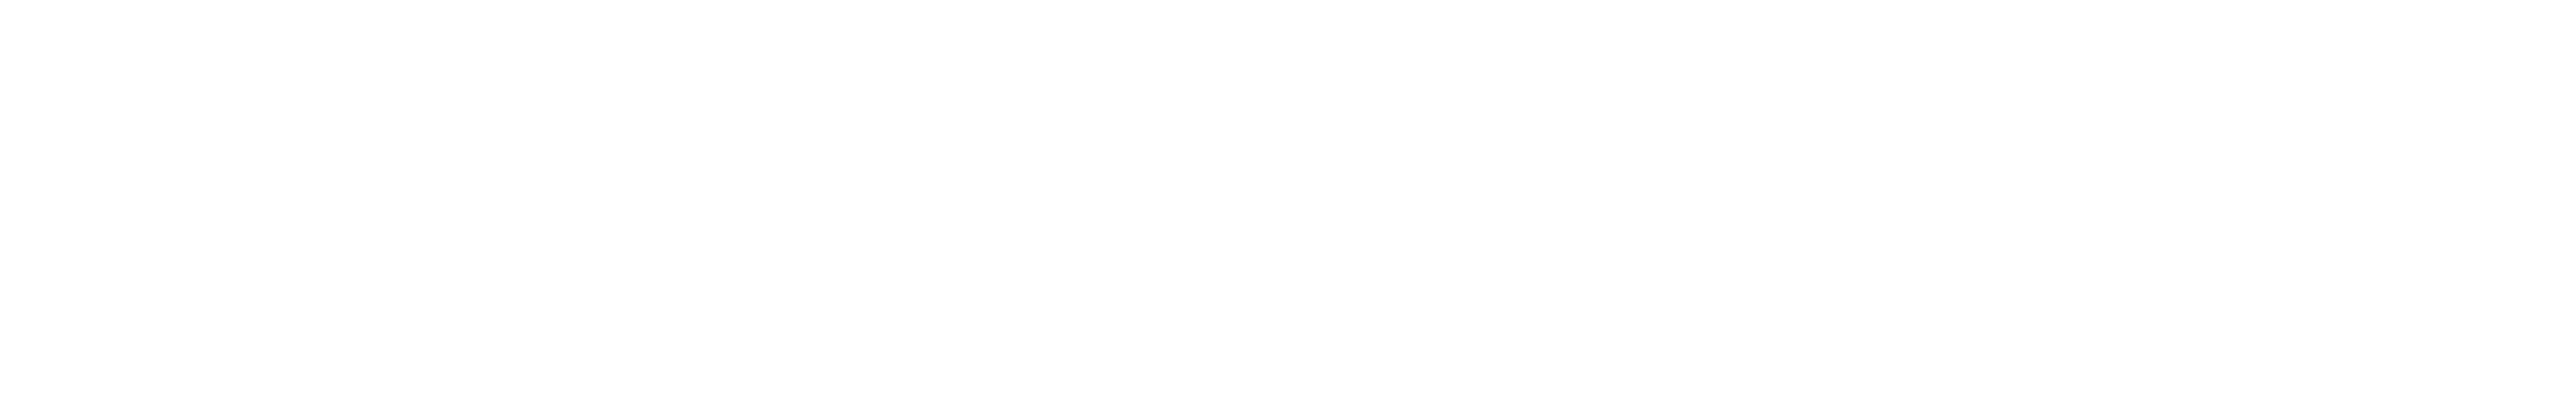 Invest Express Logo - White